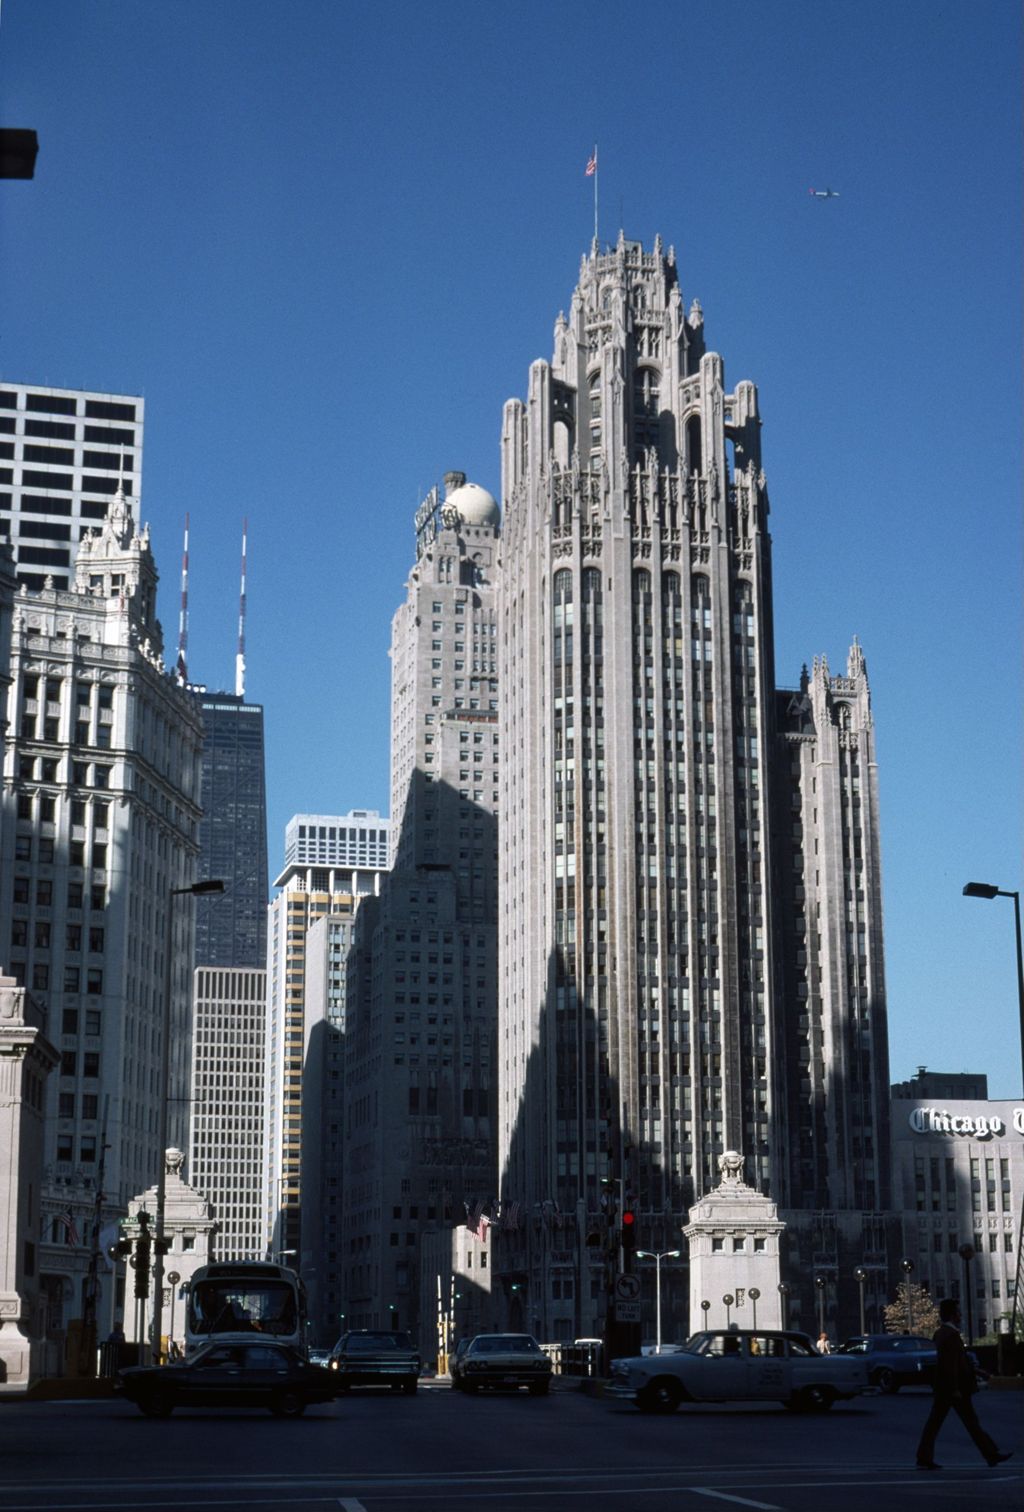 Chicago Tribune Building and North Michigan Avenue